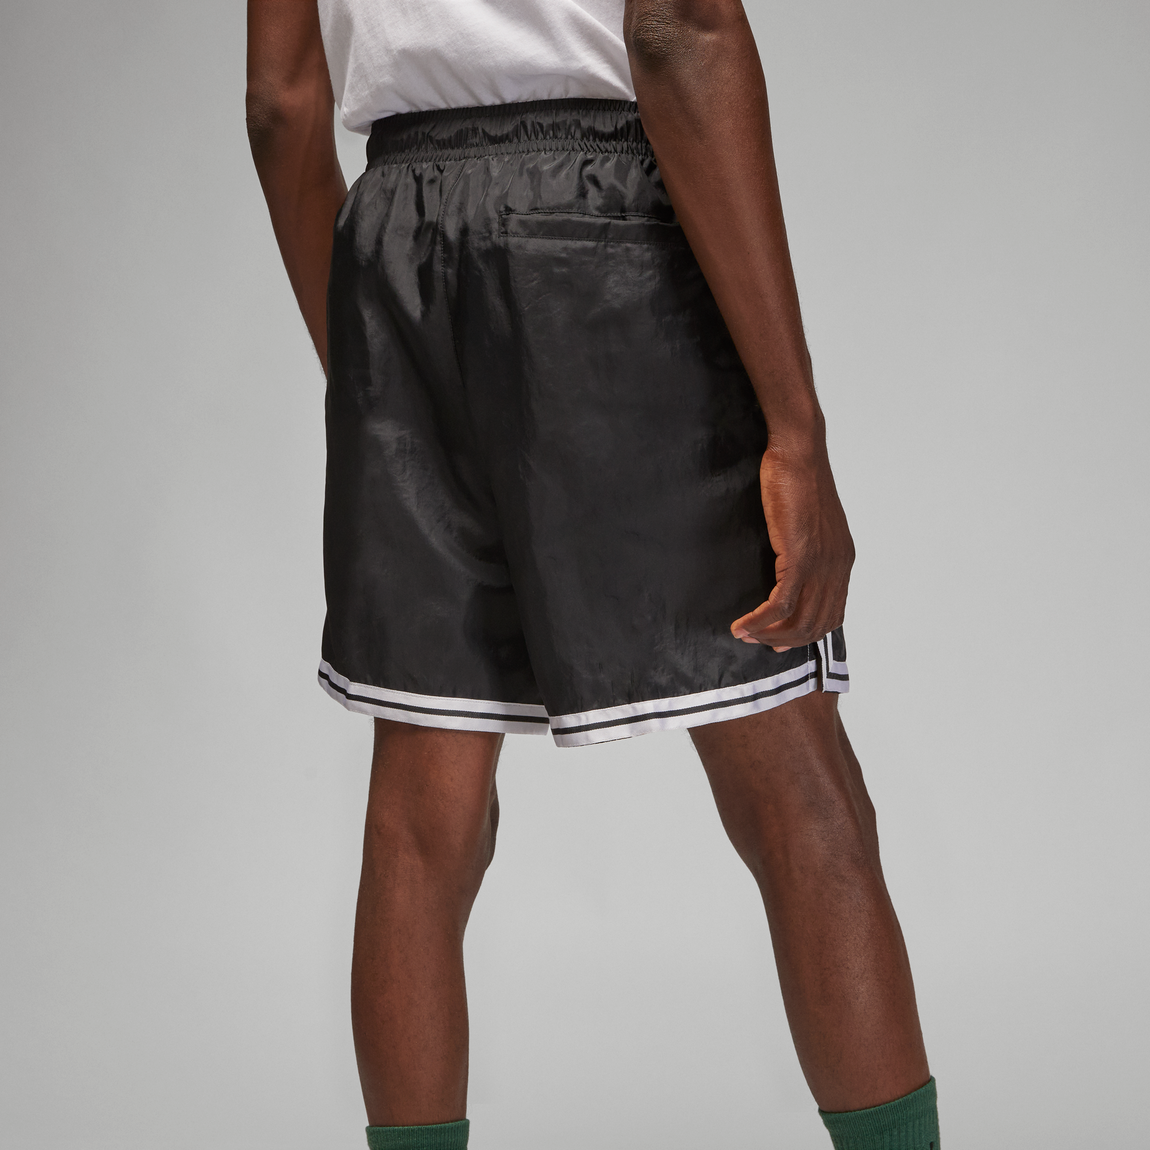 Jordan Essentials Shorts (Black/White) - Jordan Essentials Shorts (Black/White) - 